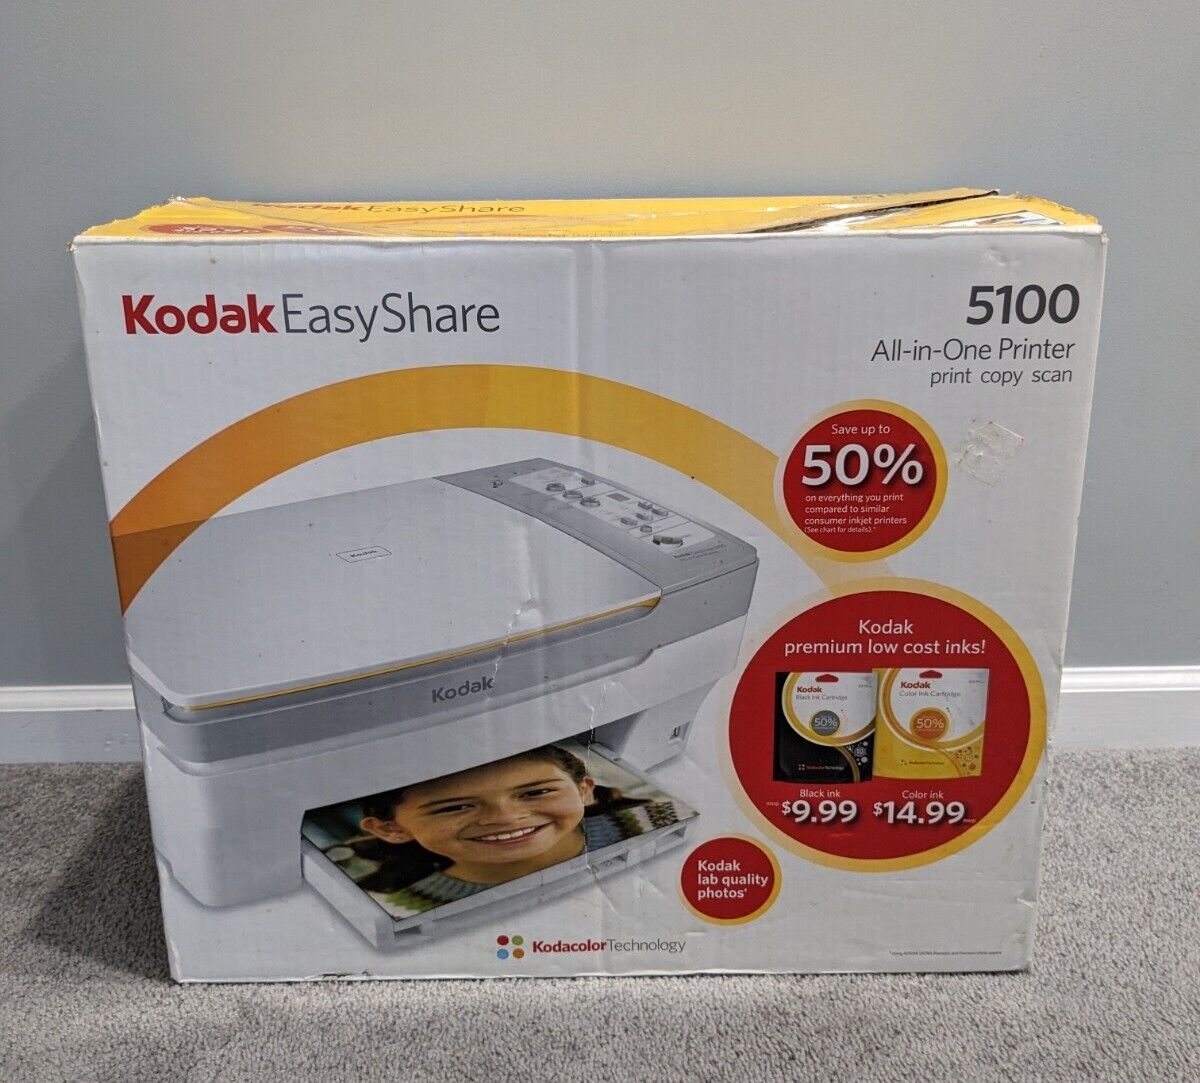 BRAND NEW Kodak EasyShare 5100 All-in-One Printer Print Copy Scan USB